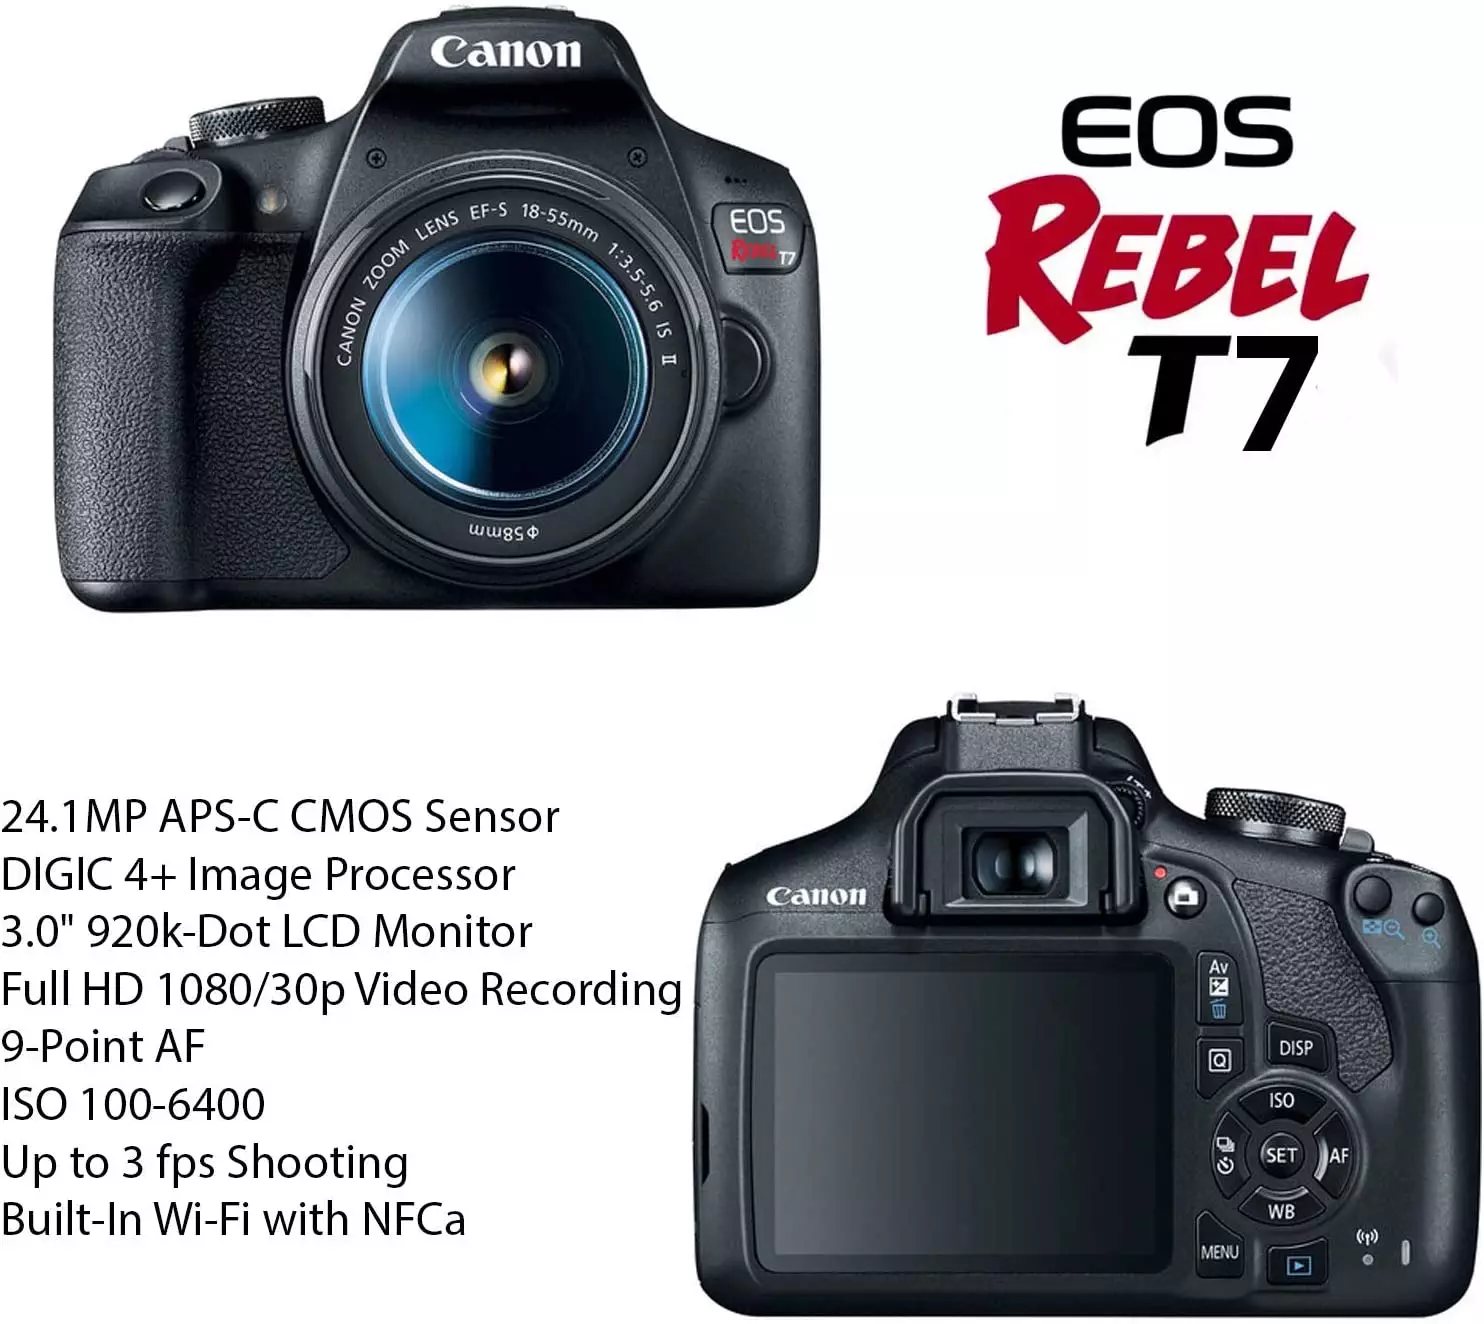 The Amazing Canon Eos Rebel T7 Dslr Camera Bundle